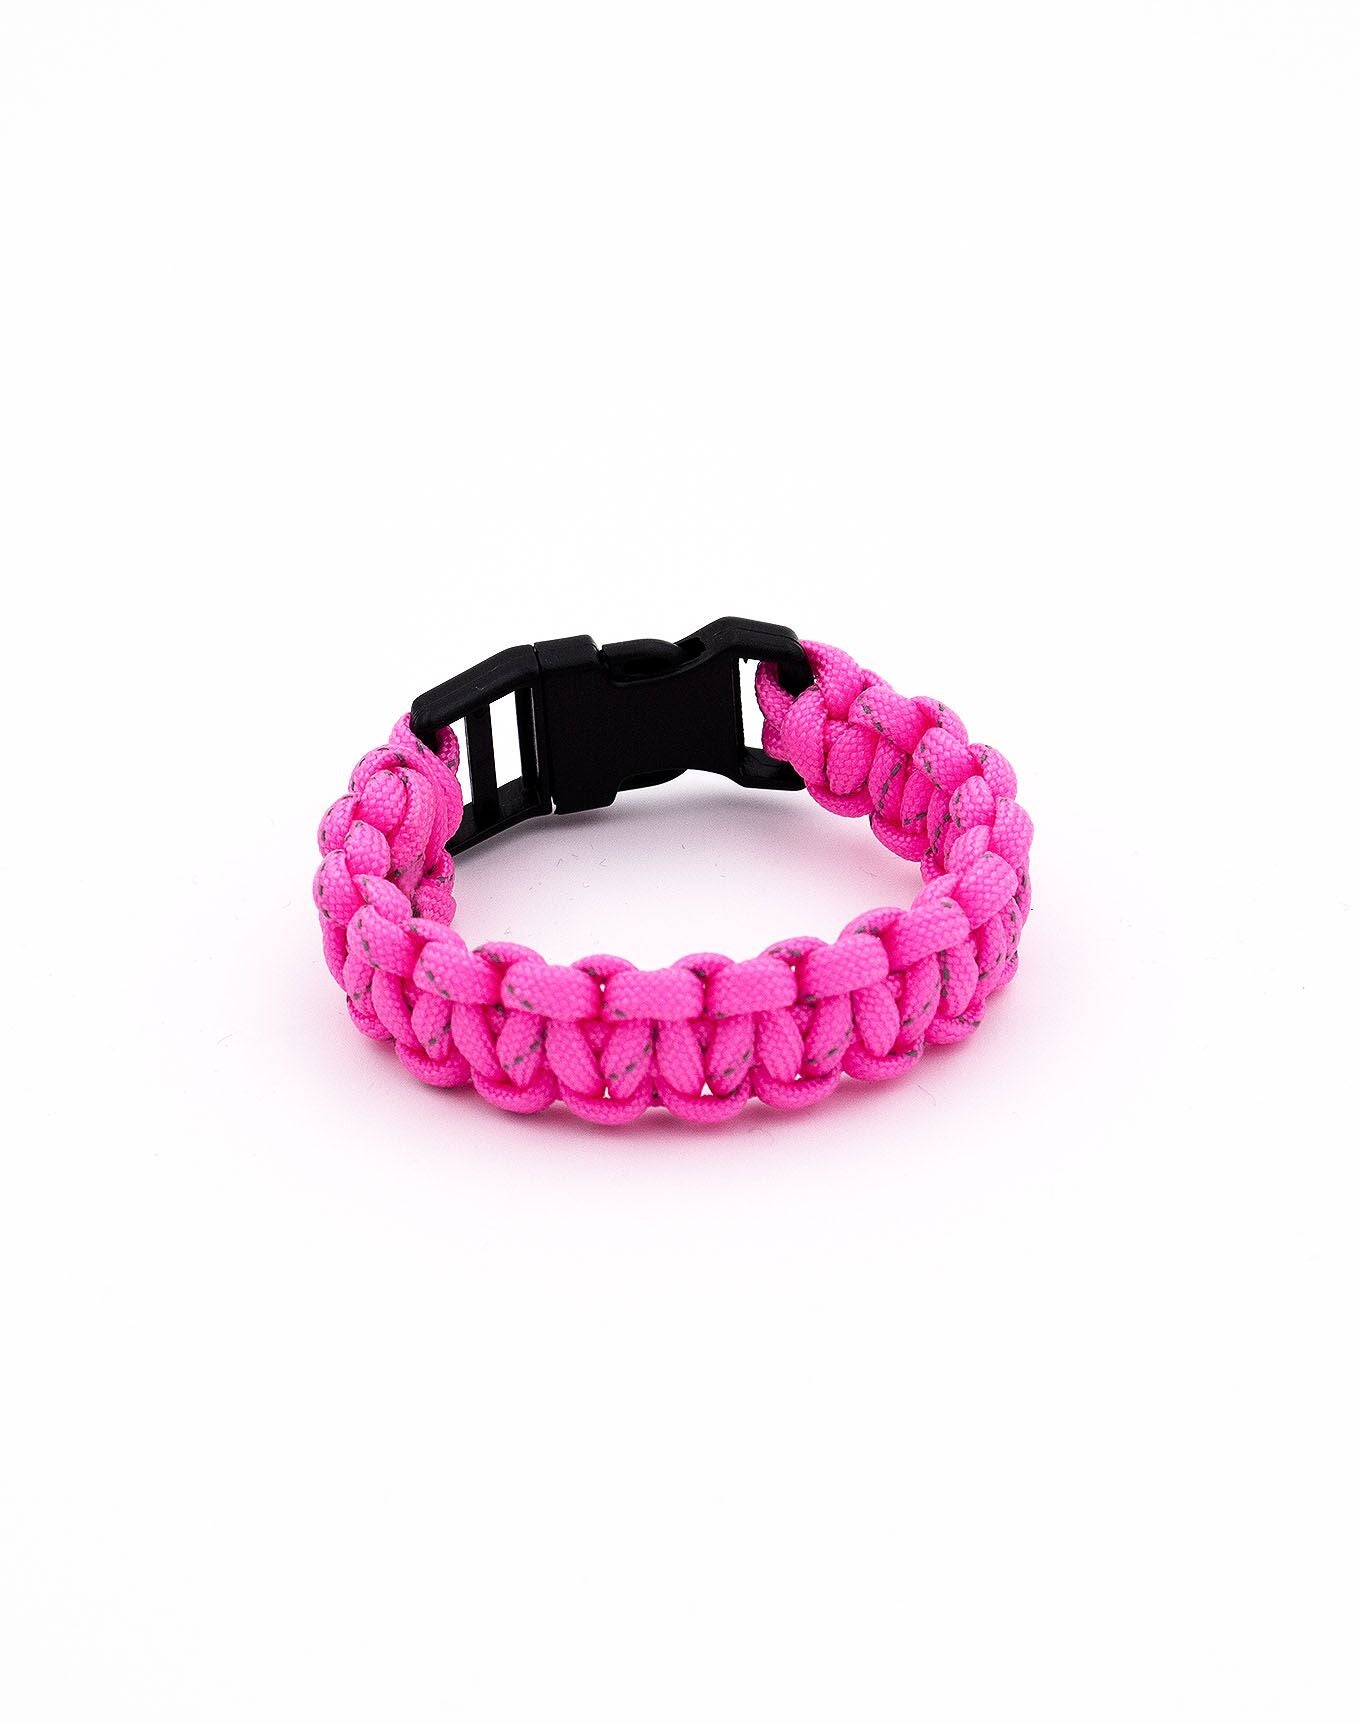 Paracord Armband pink gemustert dick - "ich fühle mich geliebt" - hallokindershop